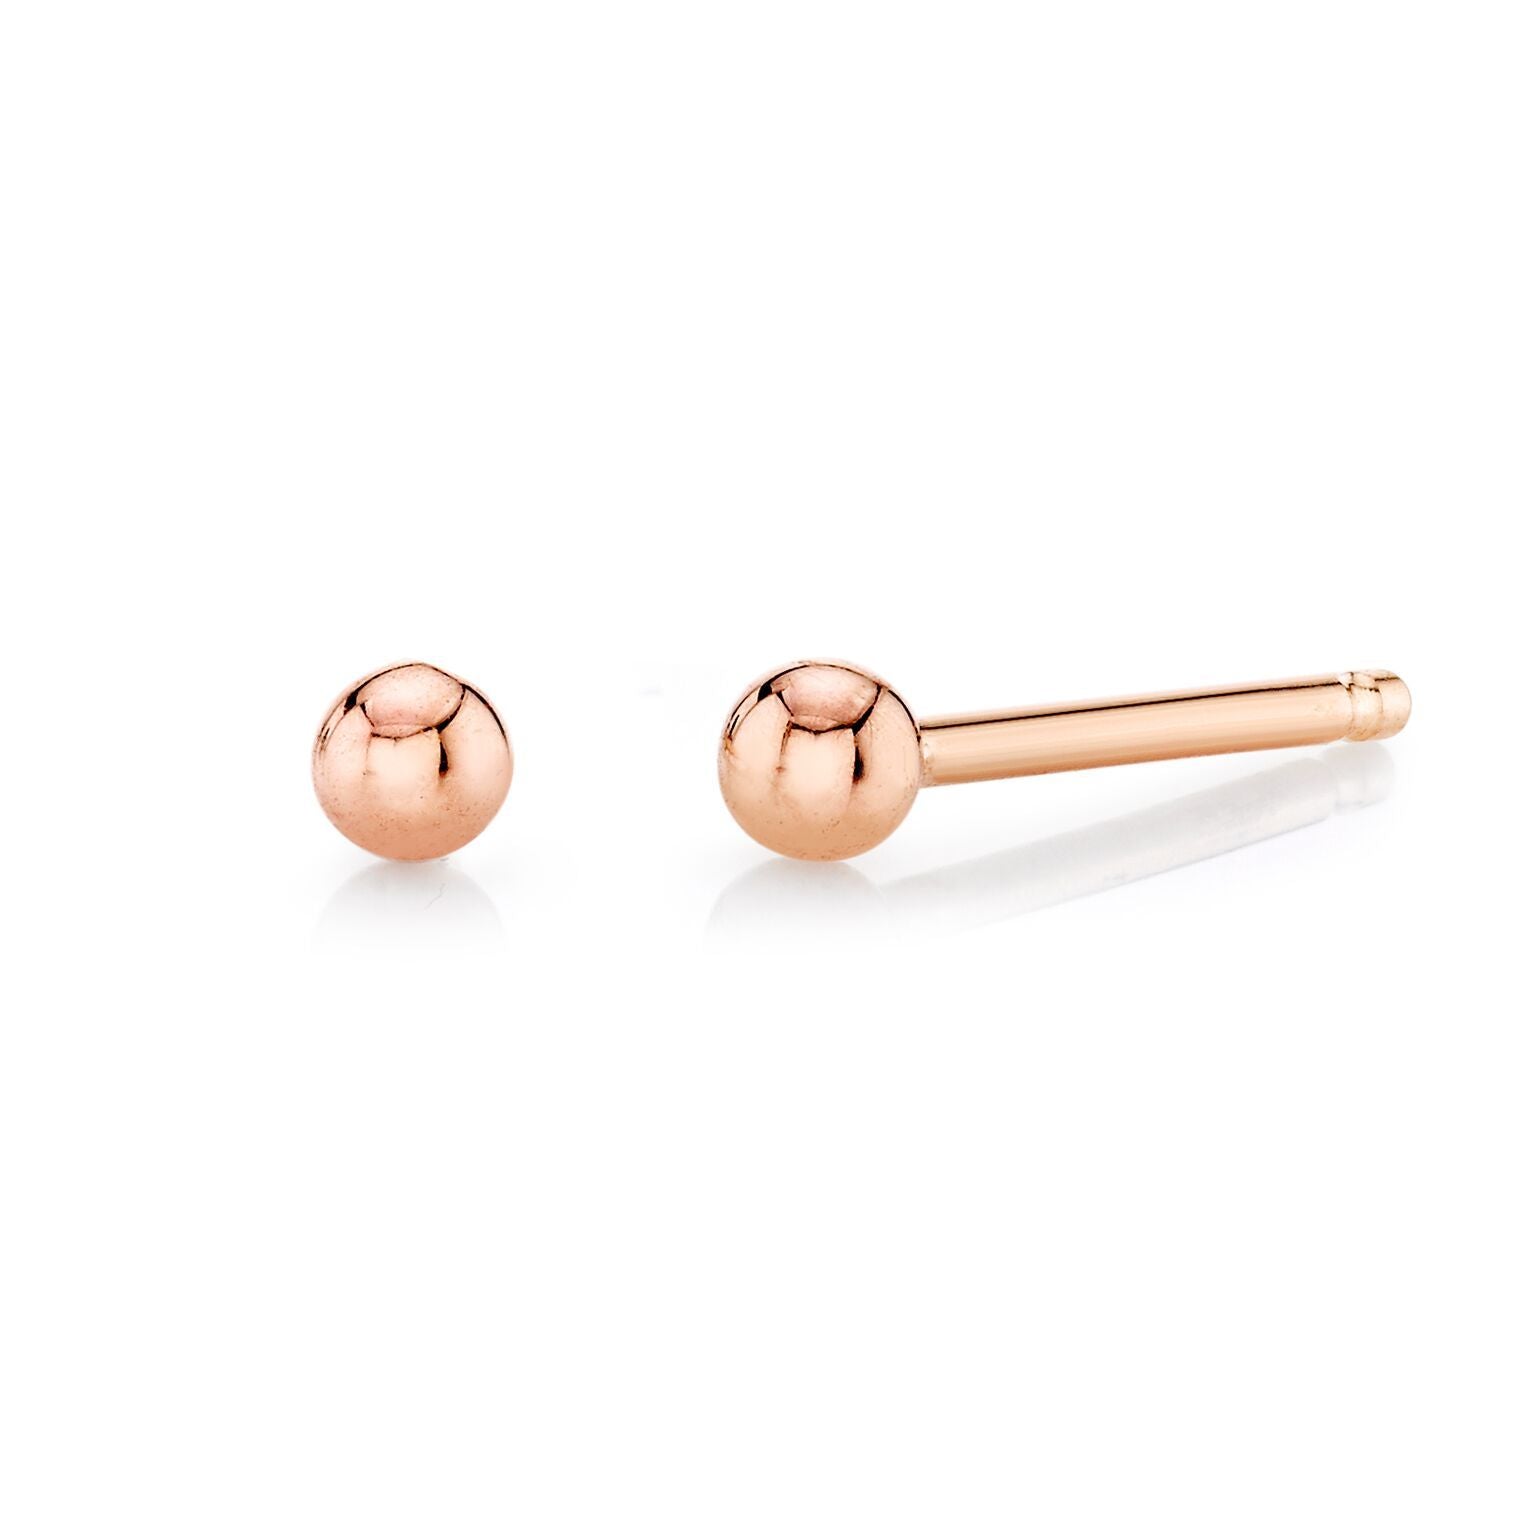 Mini Ball Stud Earrings 14K Rose Gold / Pair